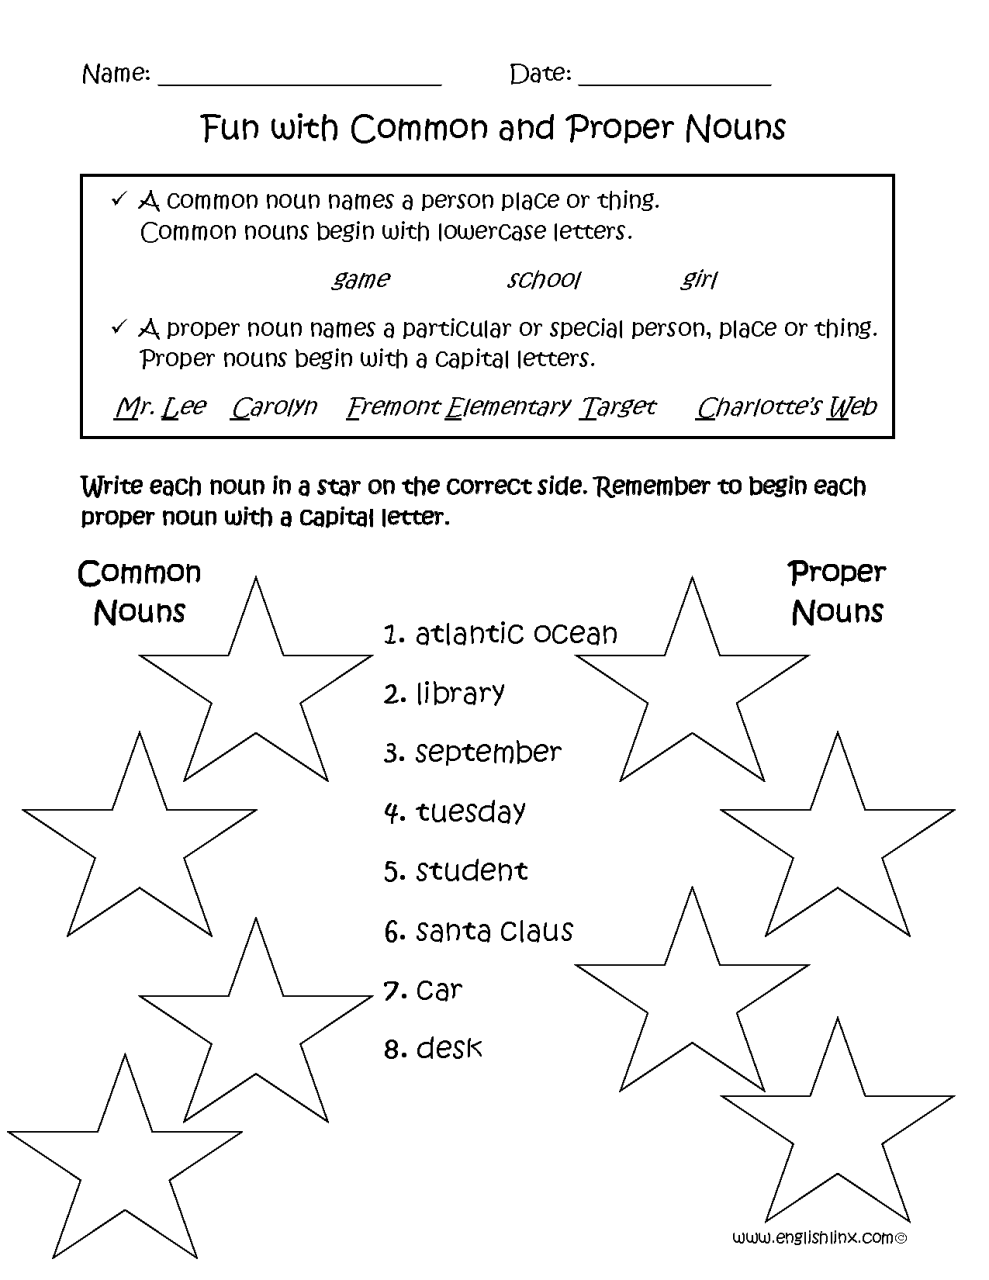 Common Noun Worksheets For Grade 2